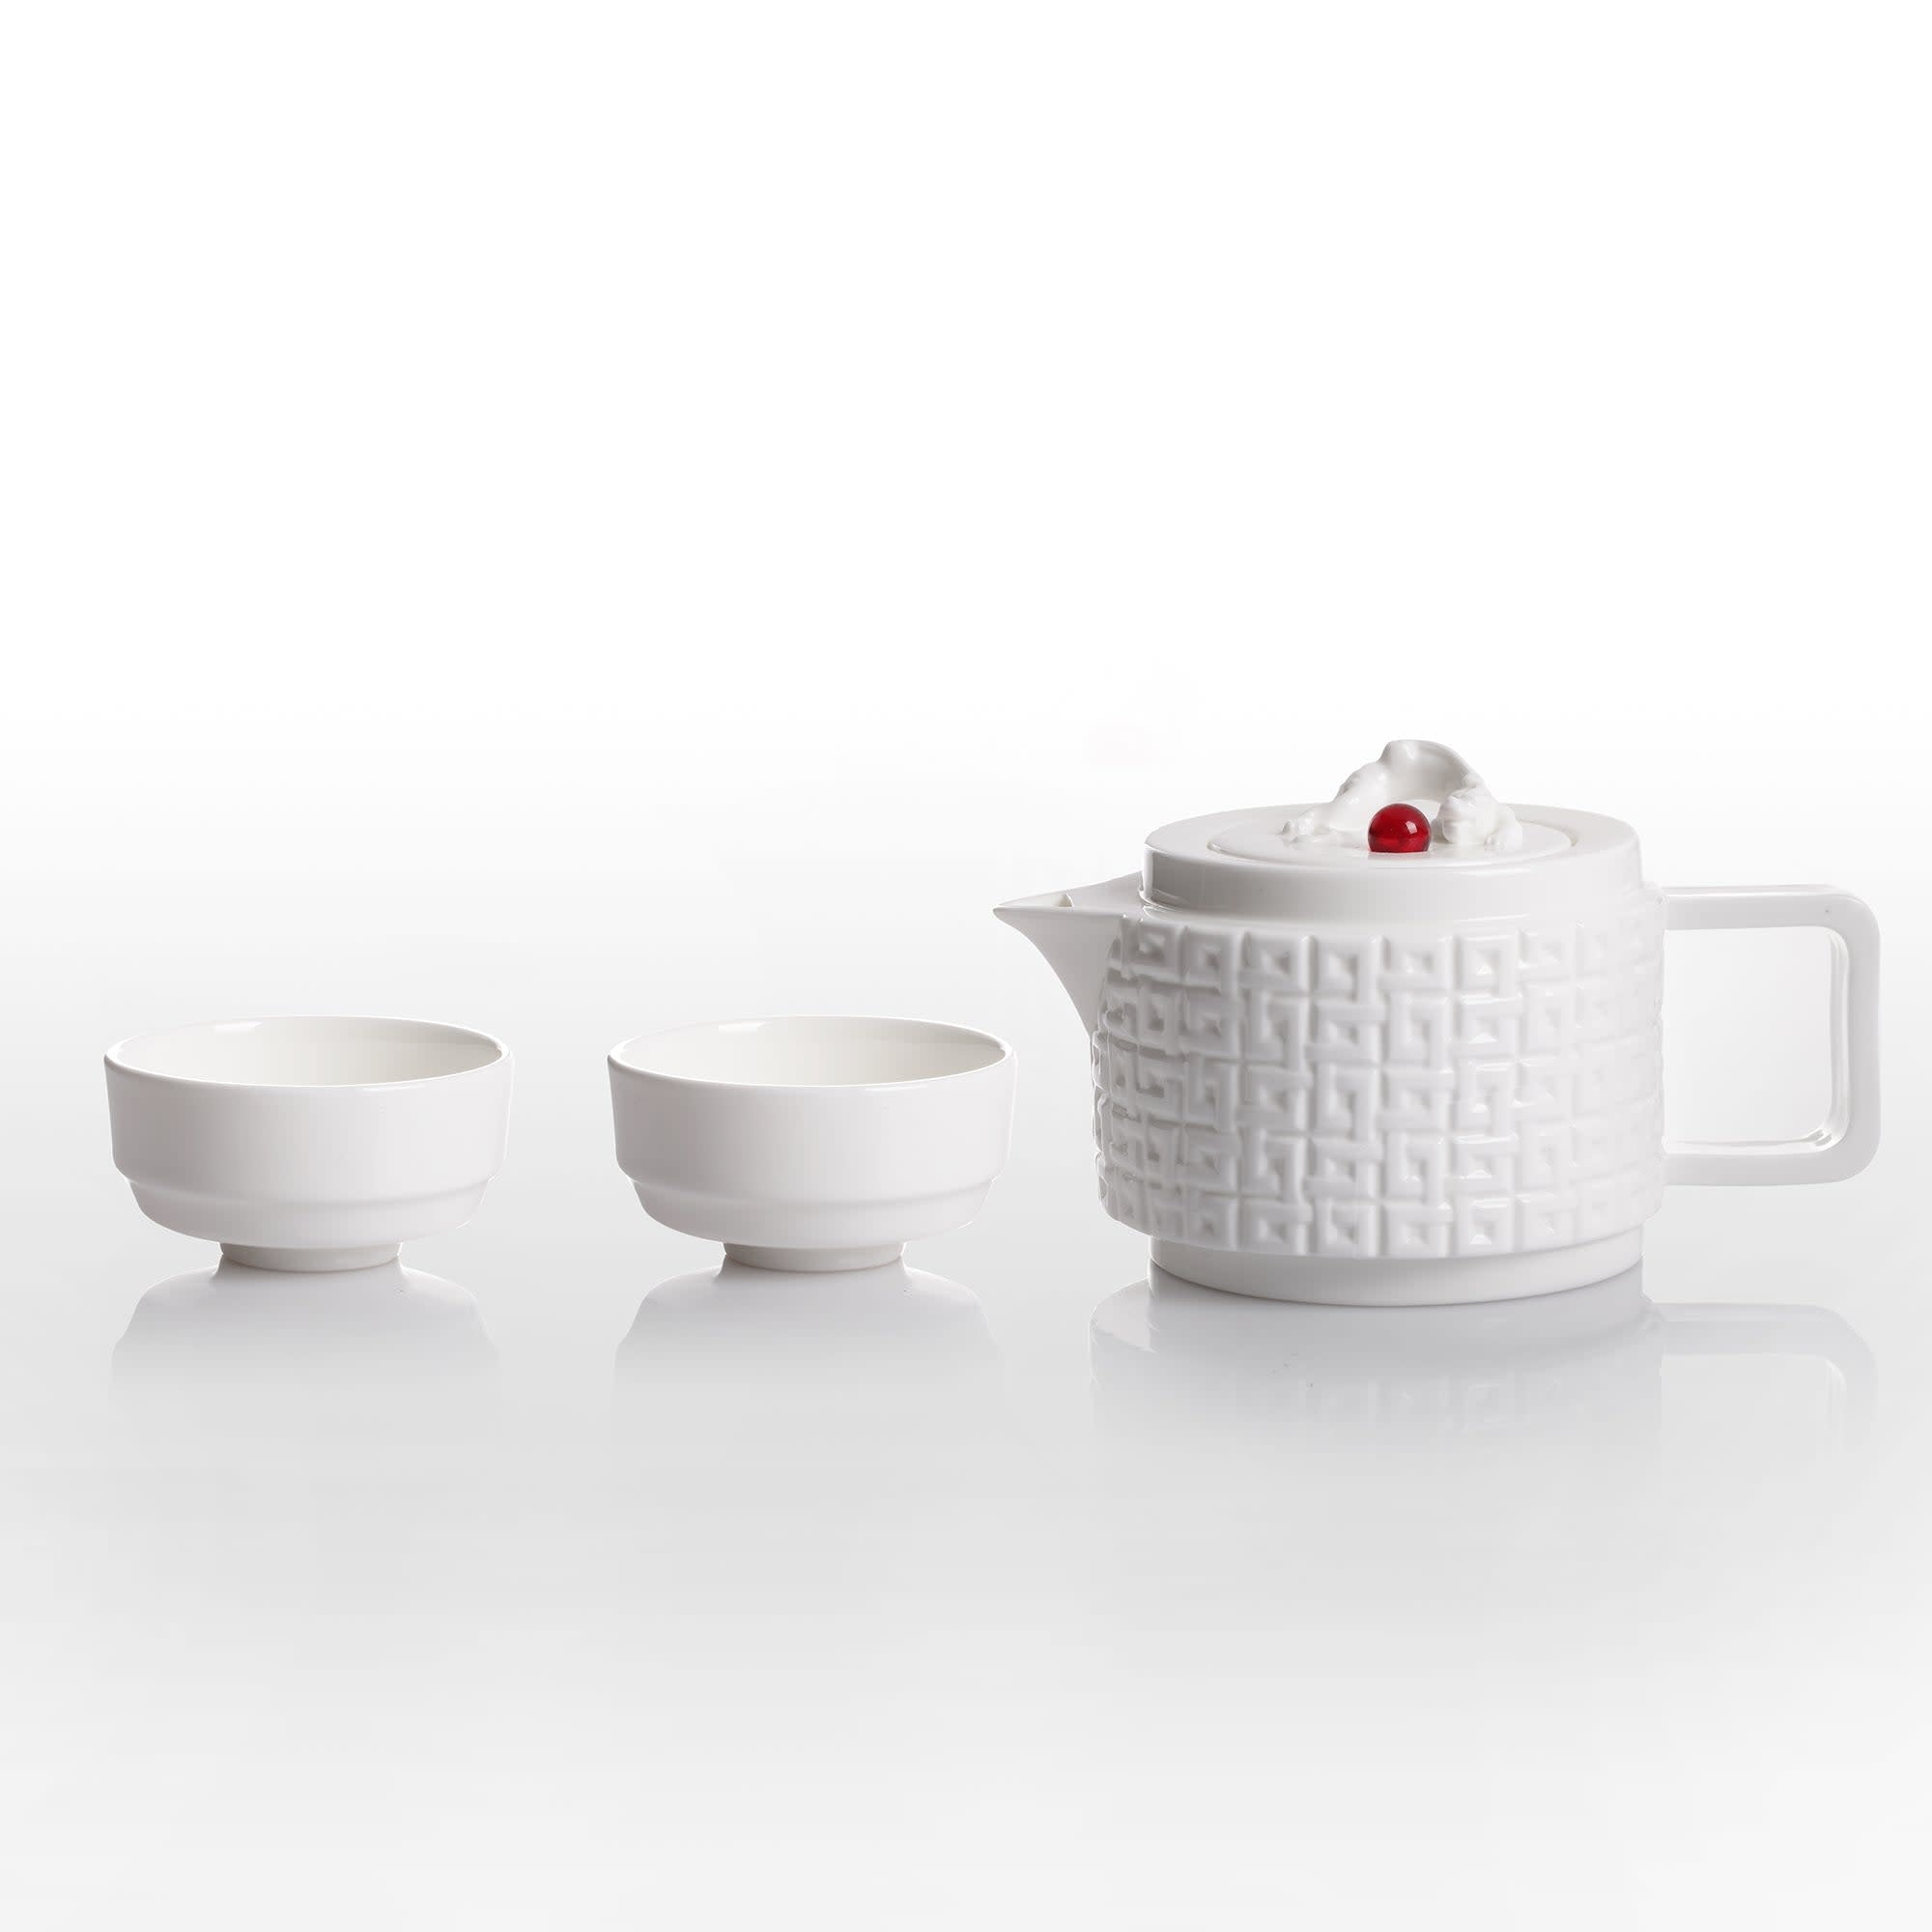 LIULI Crystal Art Tea Set, Bone China, "The Wellspring Teapot"